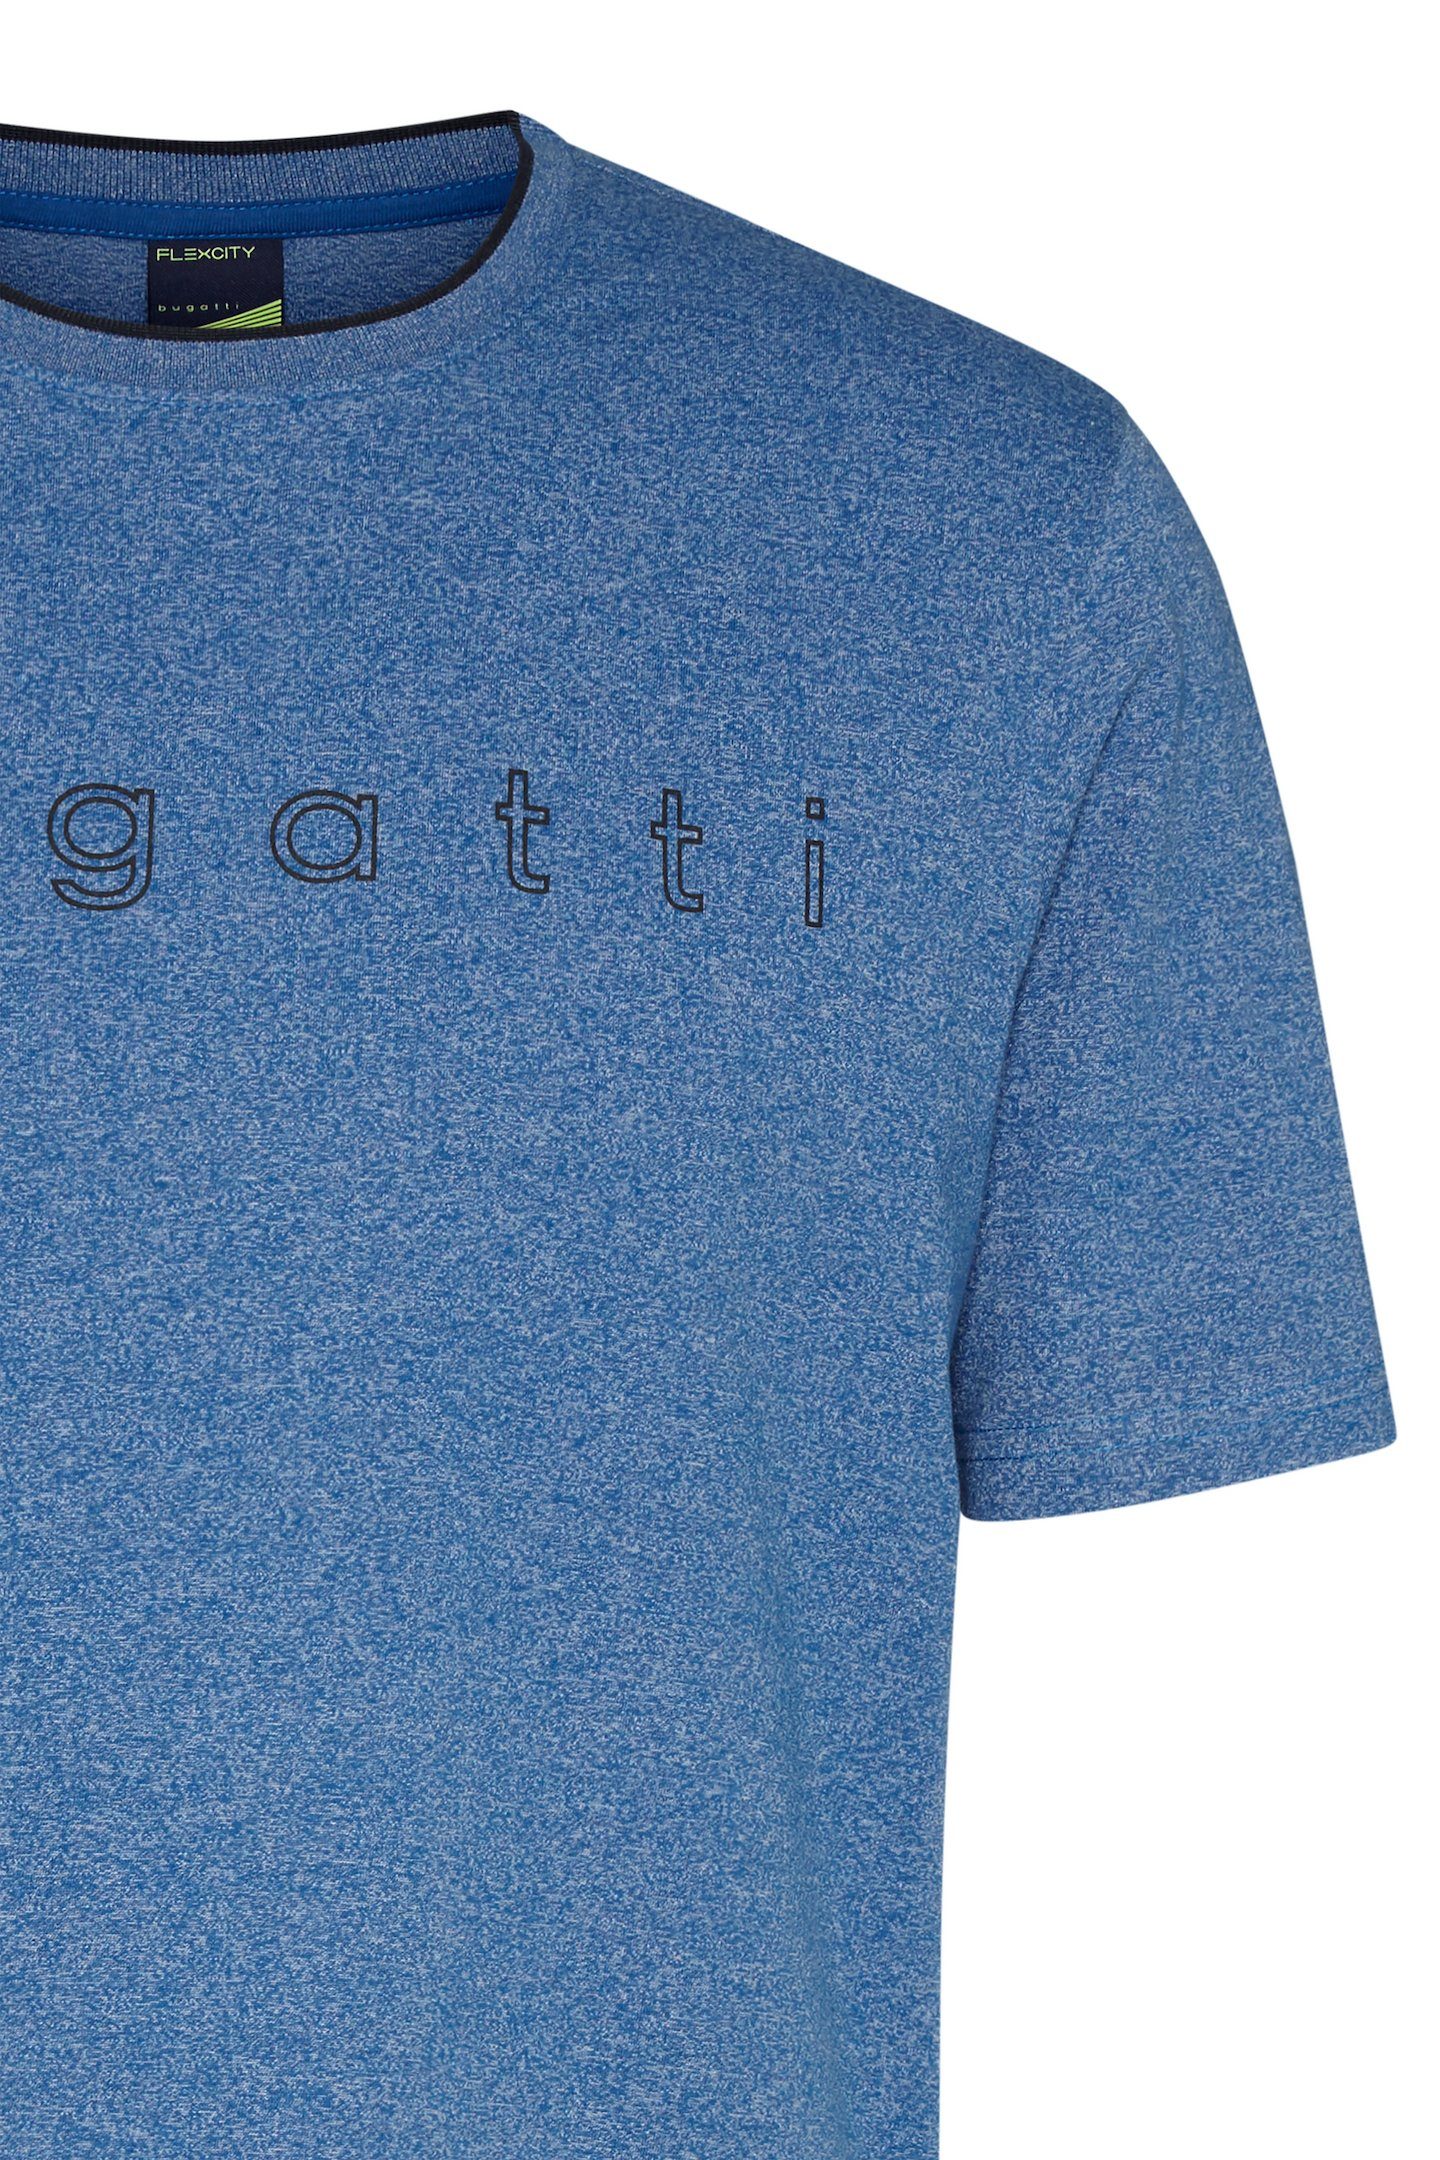 bugatti T-Shirt großem blau Logo-Print mit bugatti